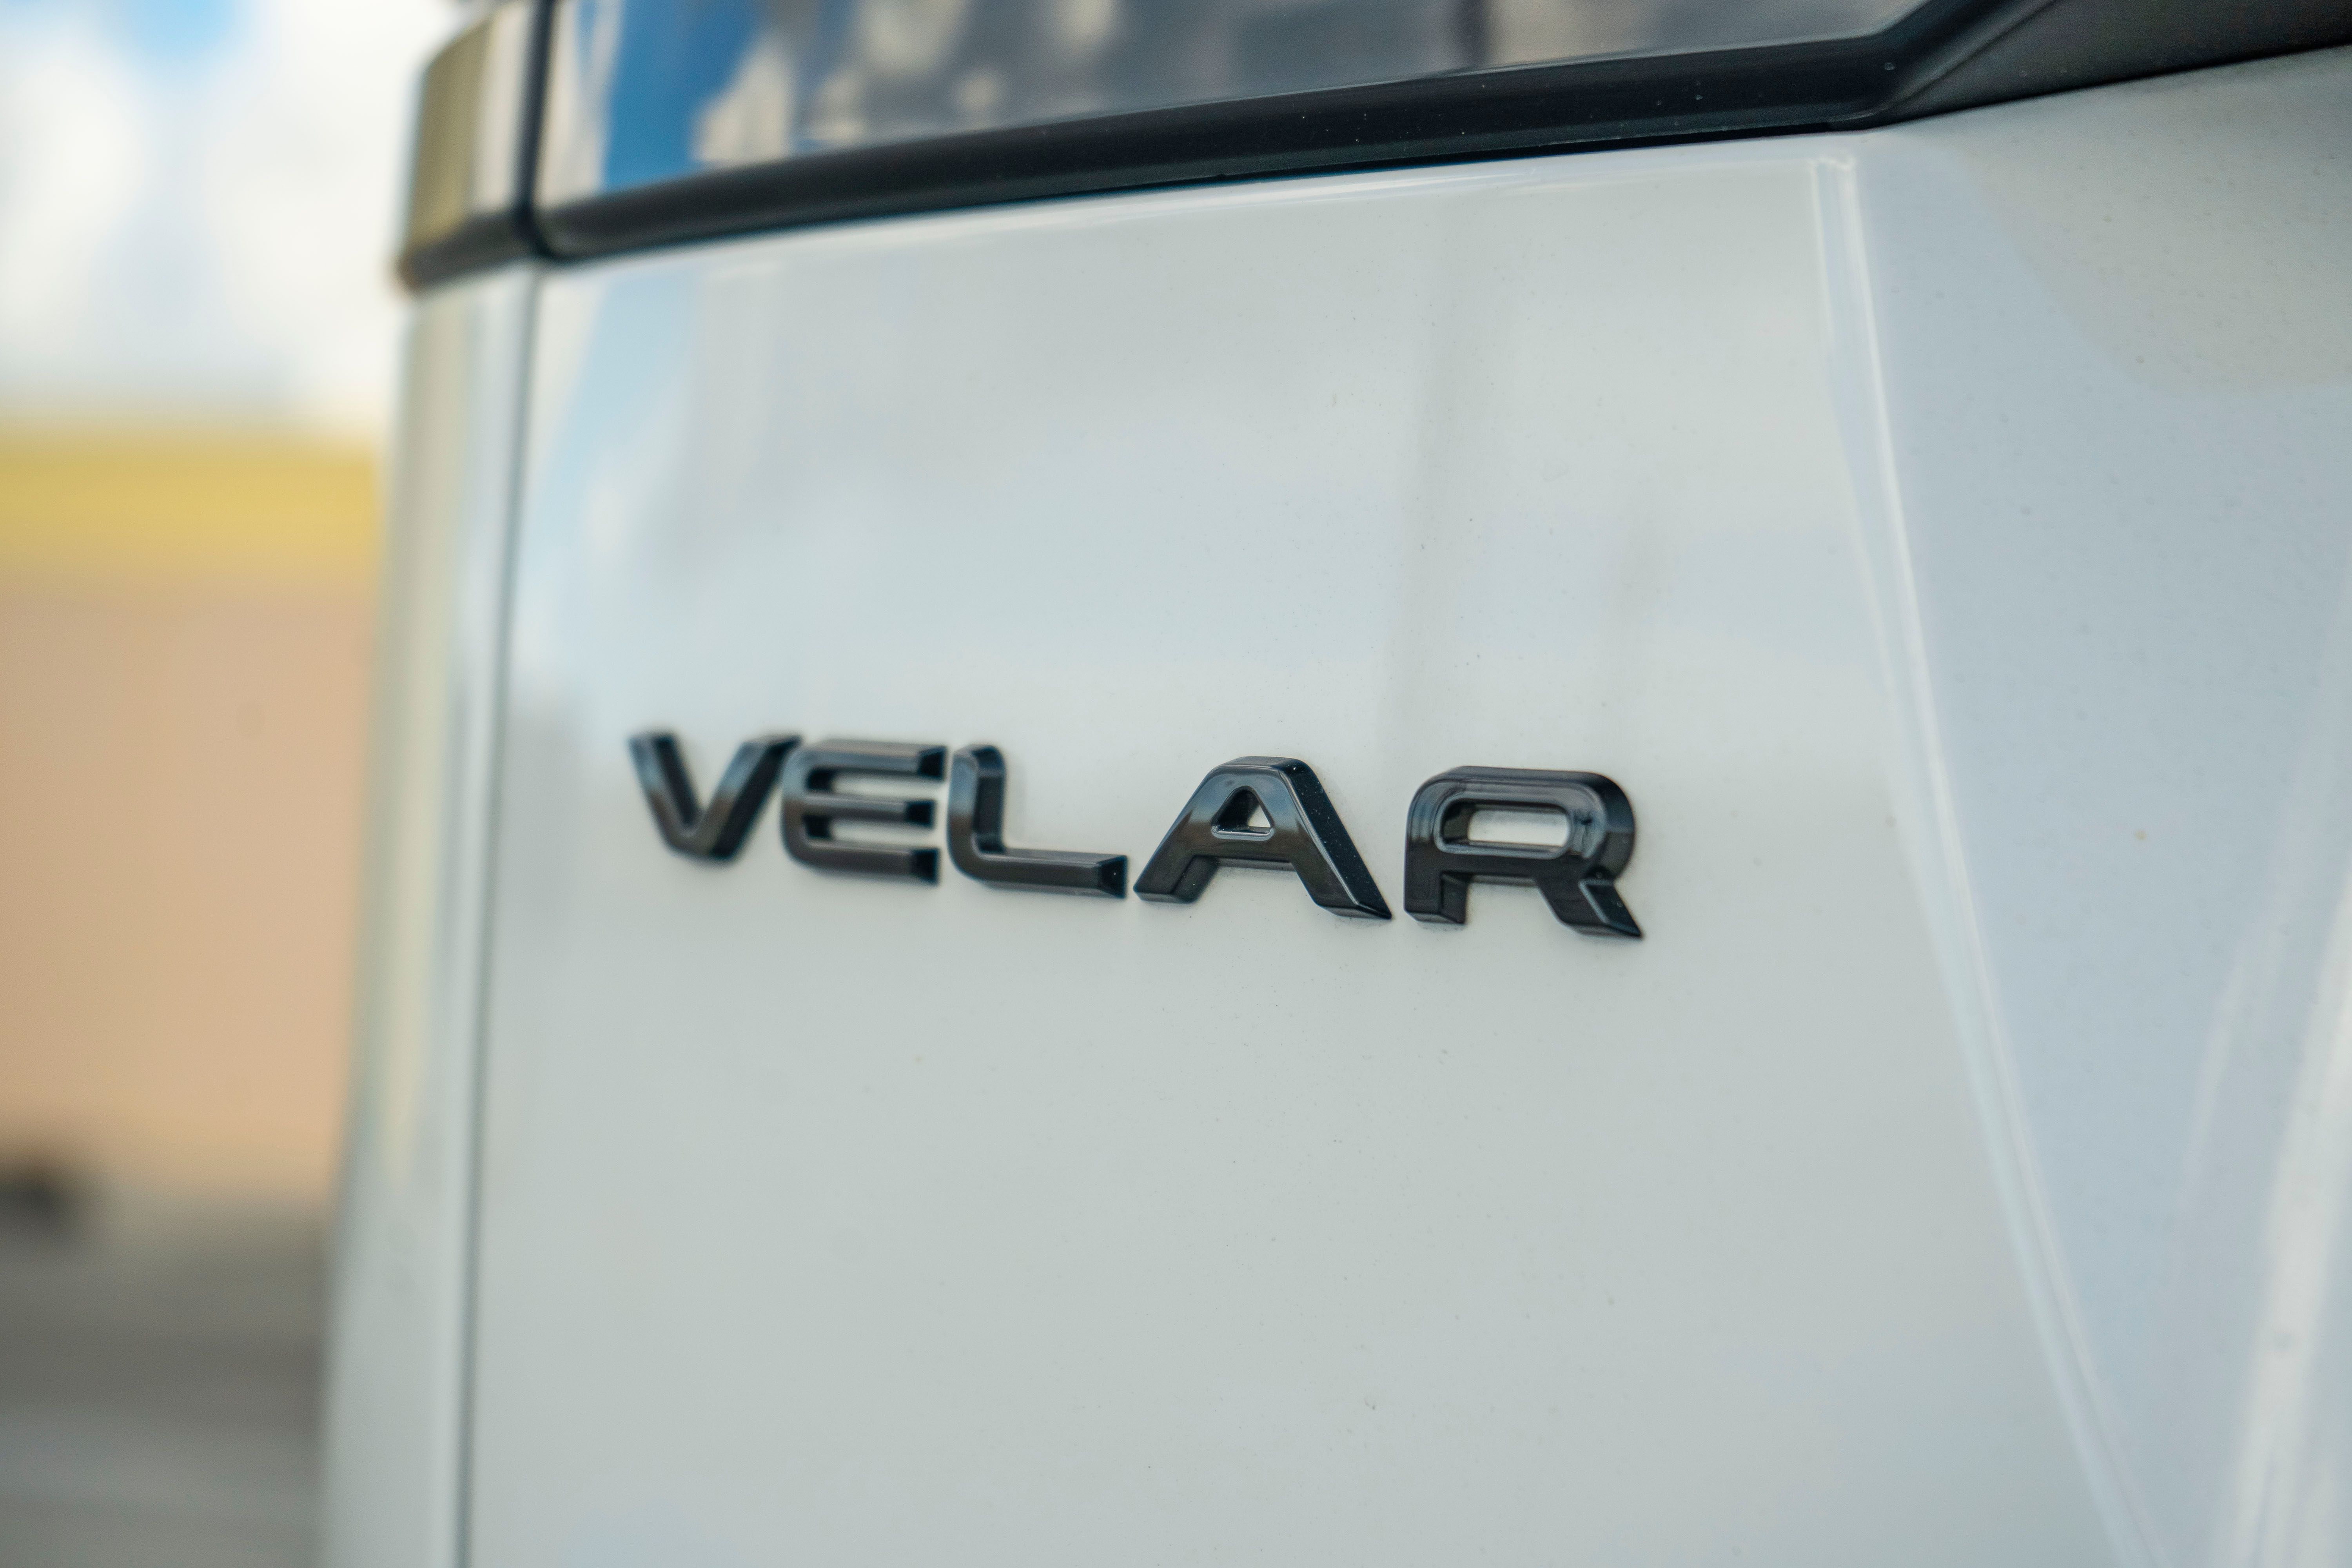 2020 Land Rover Range Rover Velar - Driven